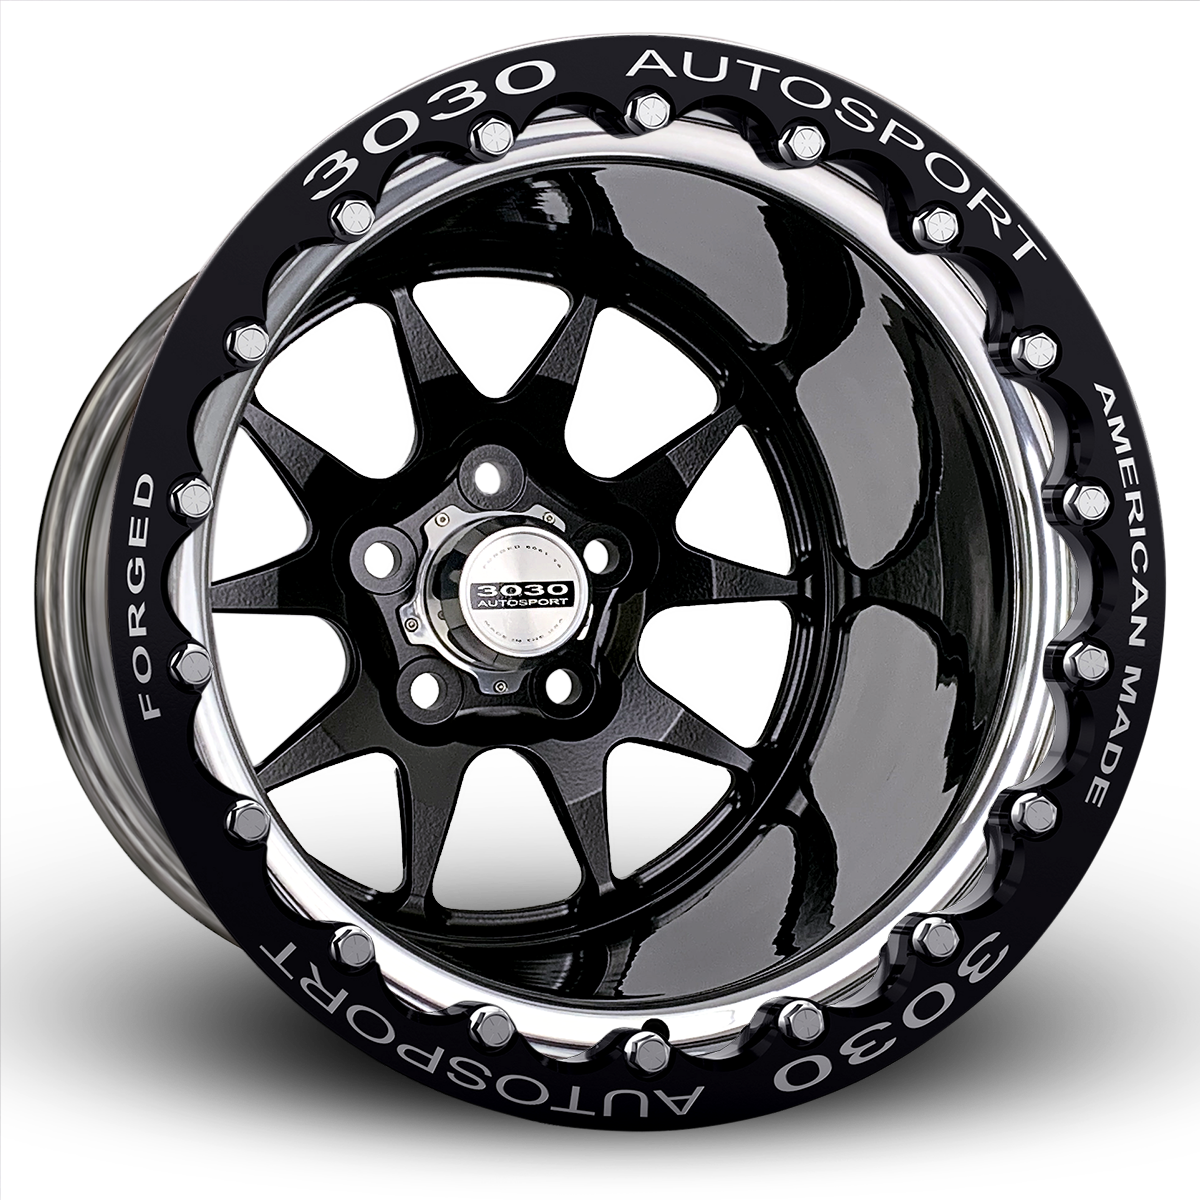 MACH-10 Double-Beadlock Wheel, Size: 15x9", Bolt Pattern: 5x4.75", Backspace: 5" [Black/Polished]